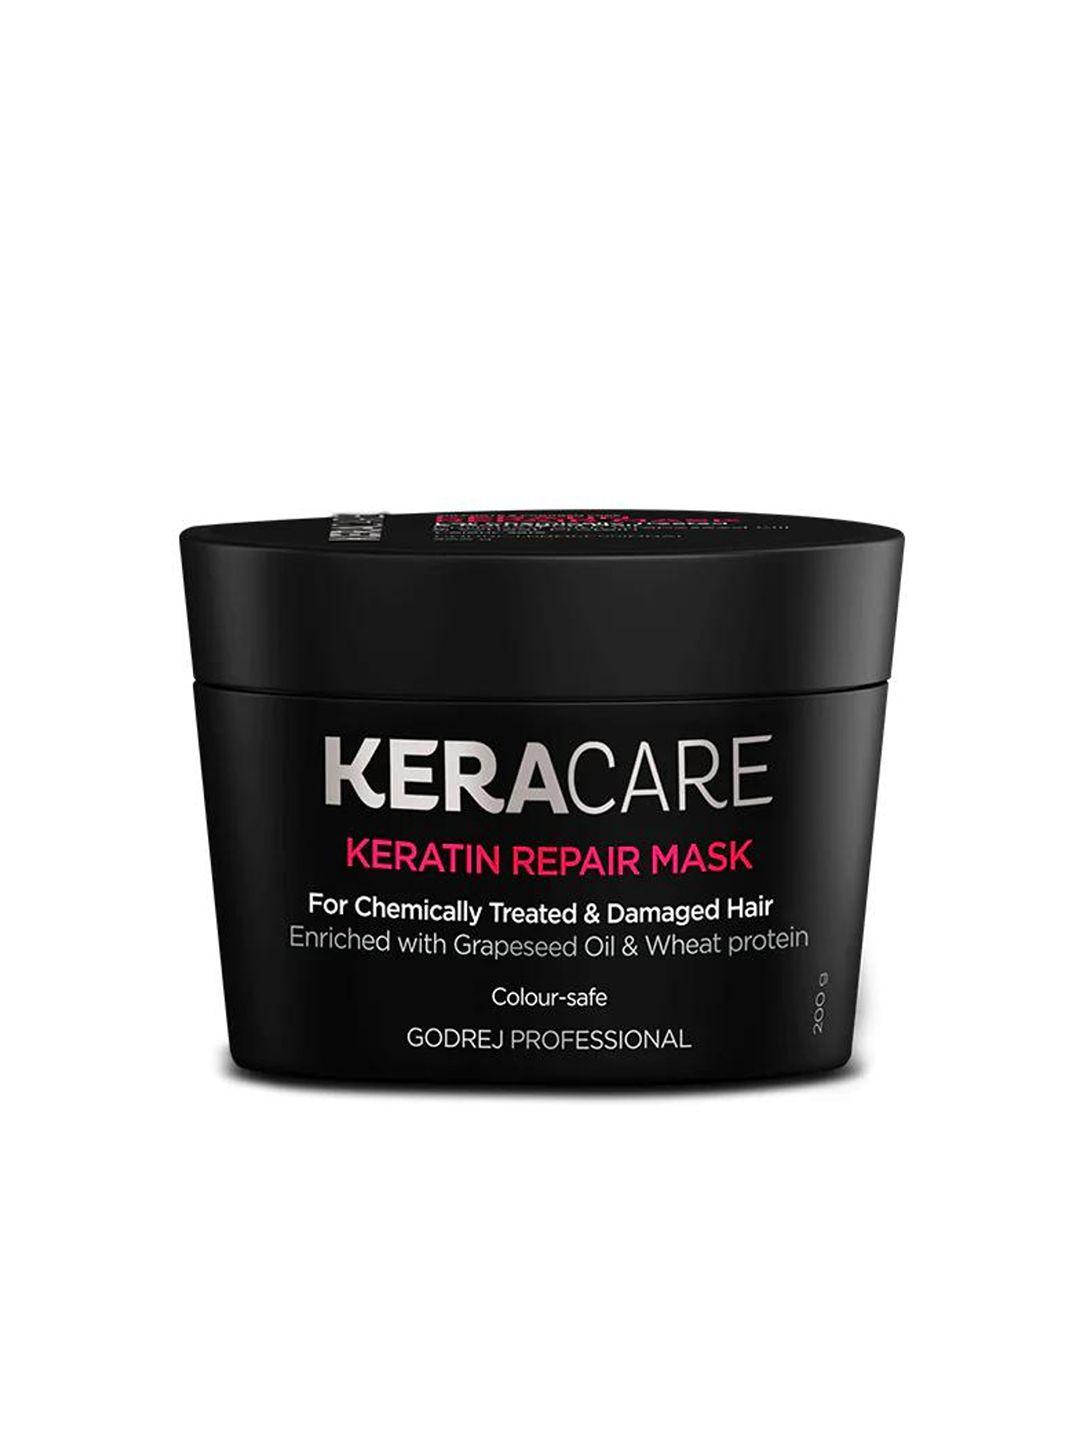 godrej professional keracare keratin repair mask for chemically treated hair - 200 g